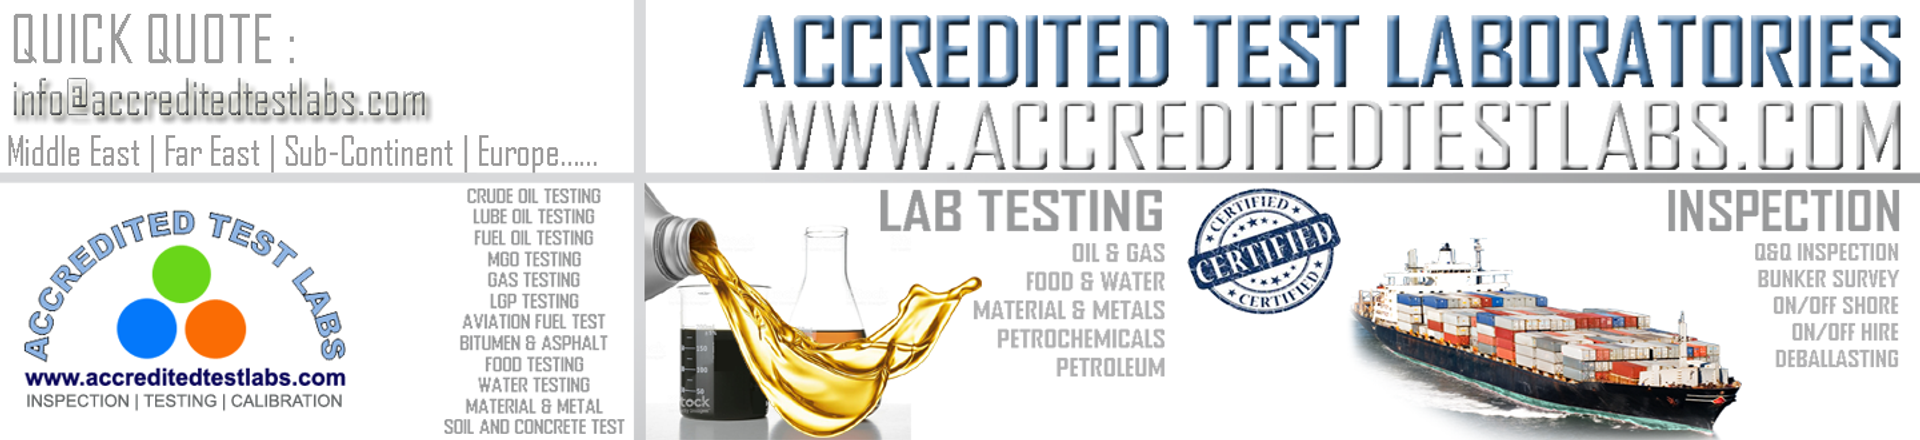 Accredited Test Laboratories